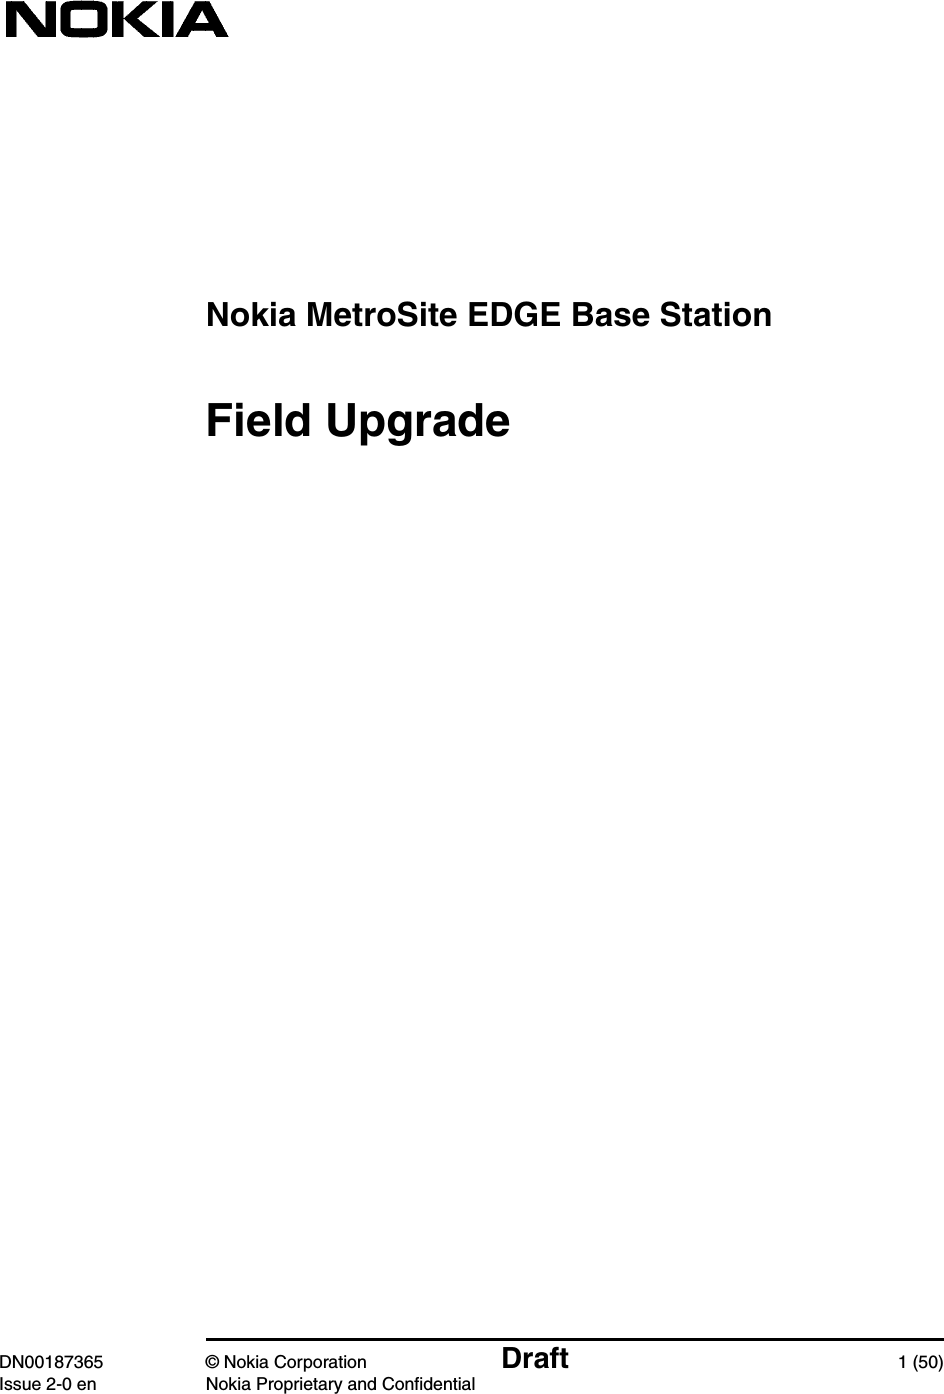 Nokia MetroSite EDGE Base StationDN00187365 © Nokia Corporation Draft 1 (50)Issue 2-0 en Nokia Proprietary and ConfidentialField Upgrade